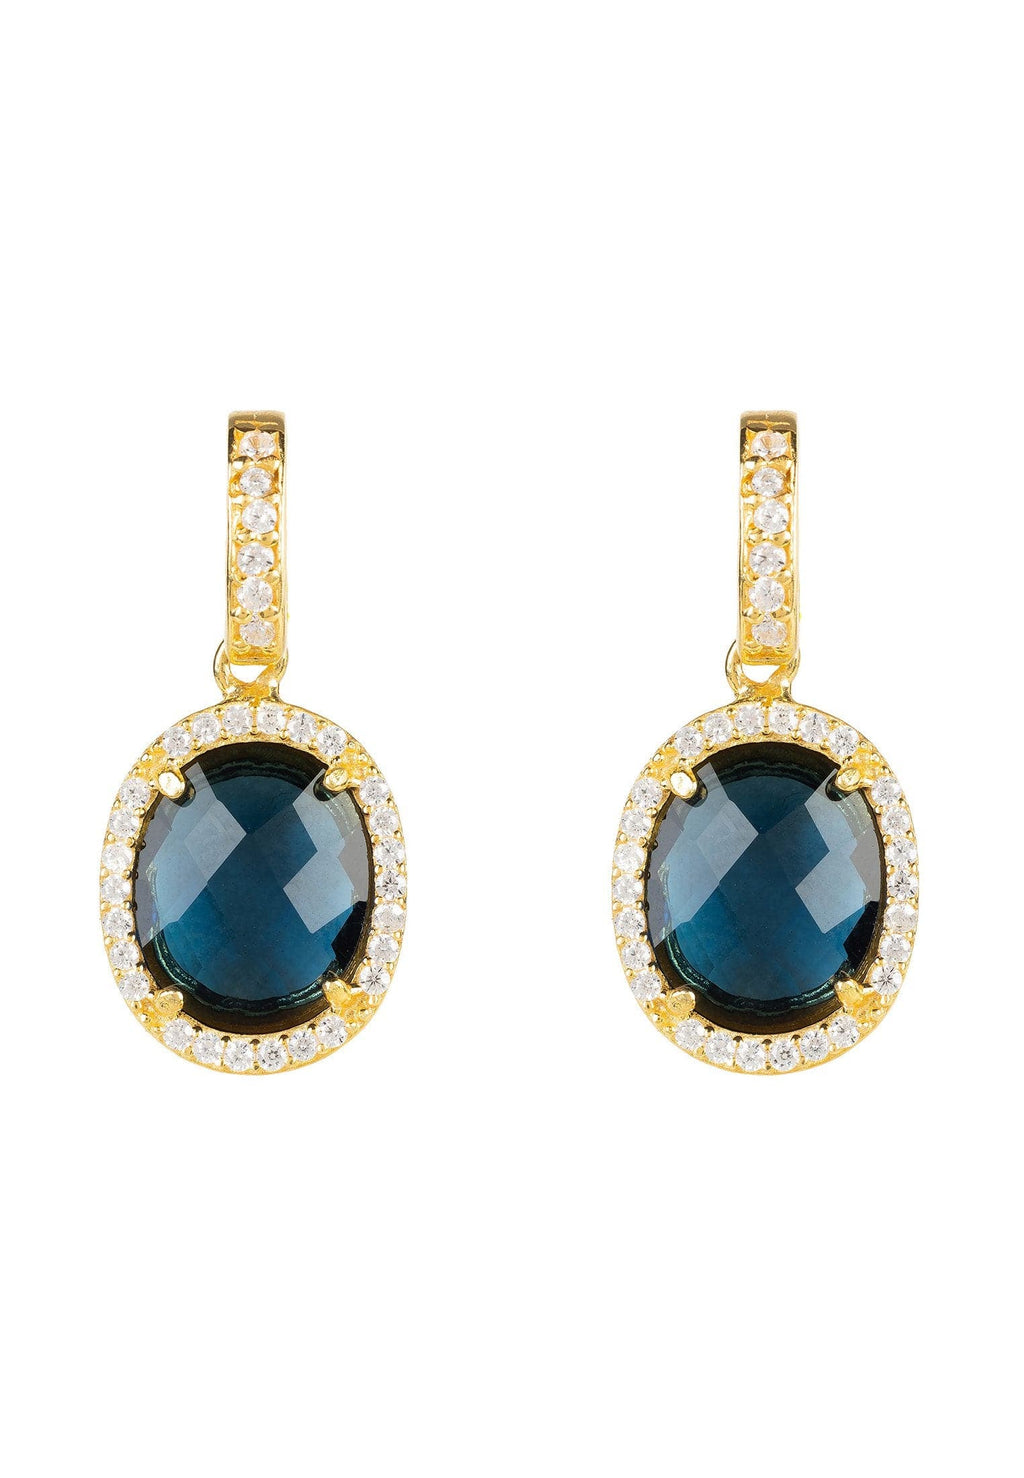 Latelita London Jewelry & Accessories - Earrings Beatrice Oval Gemstone Drop Earrings Gold Sapphire Hydro | LATELITA